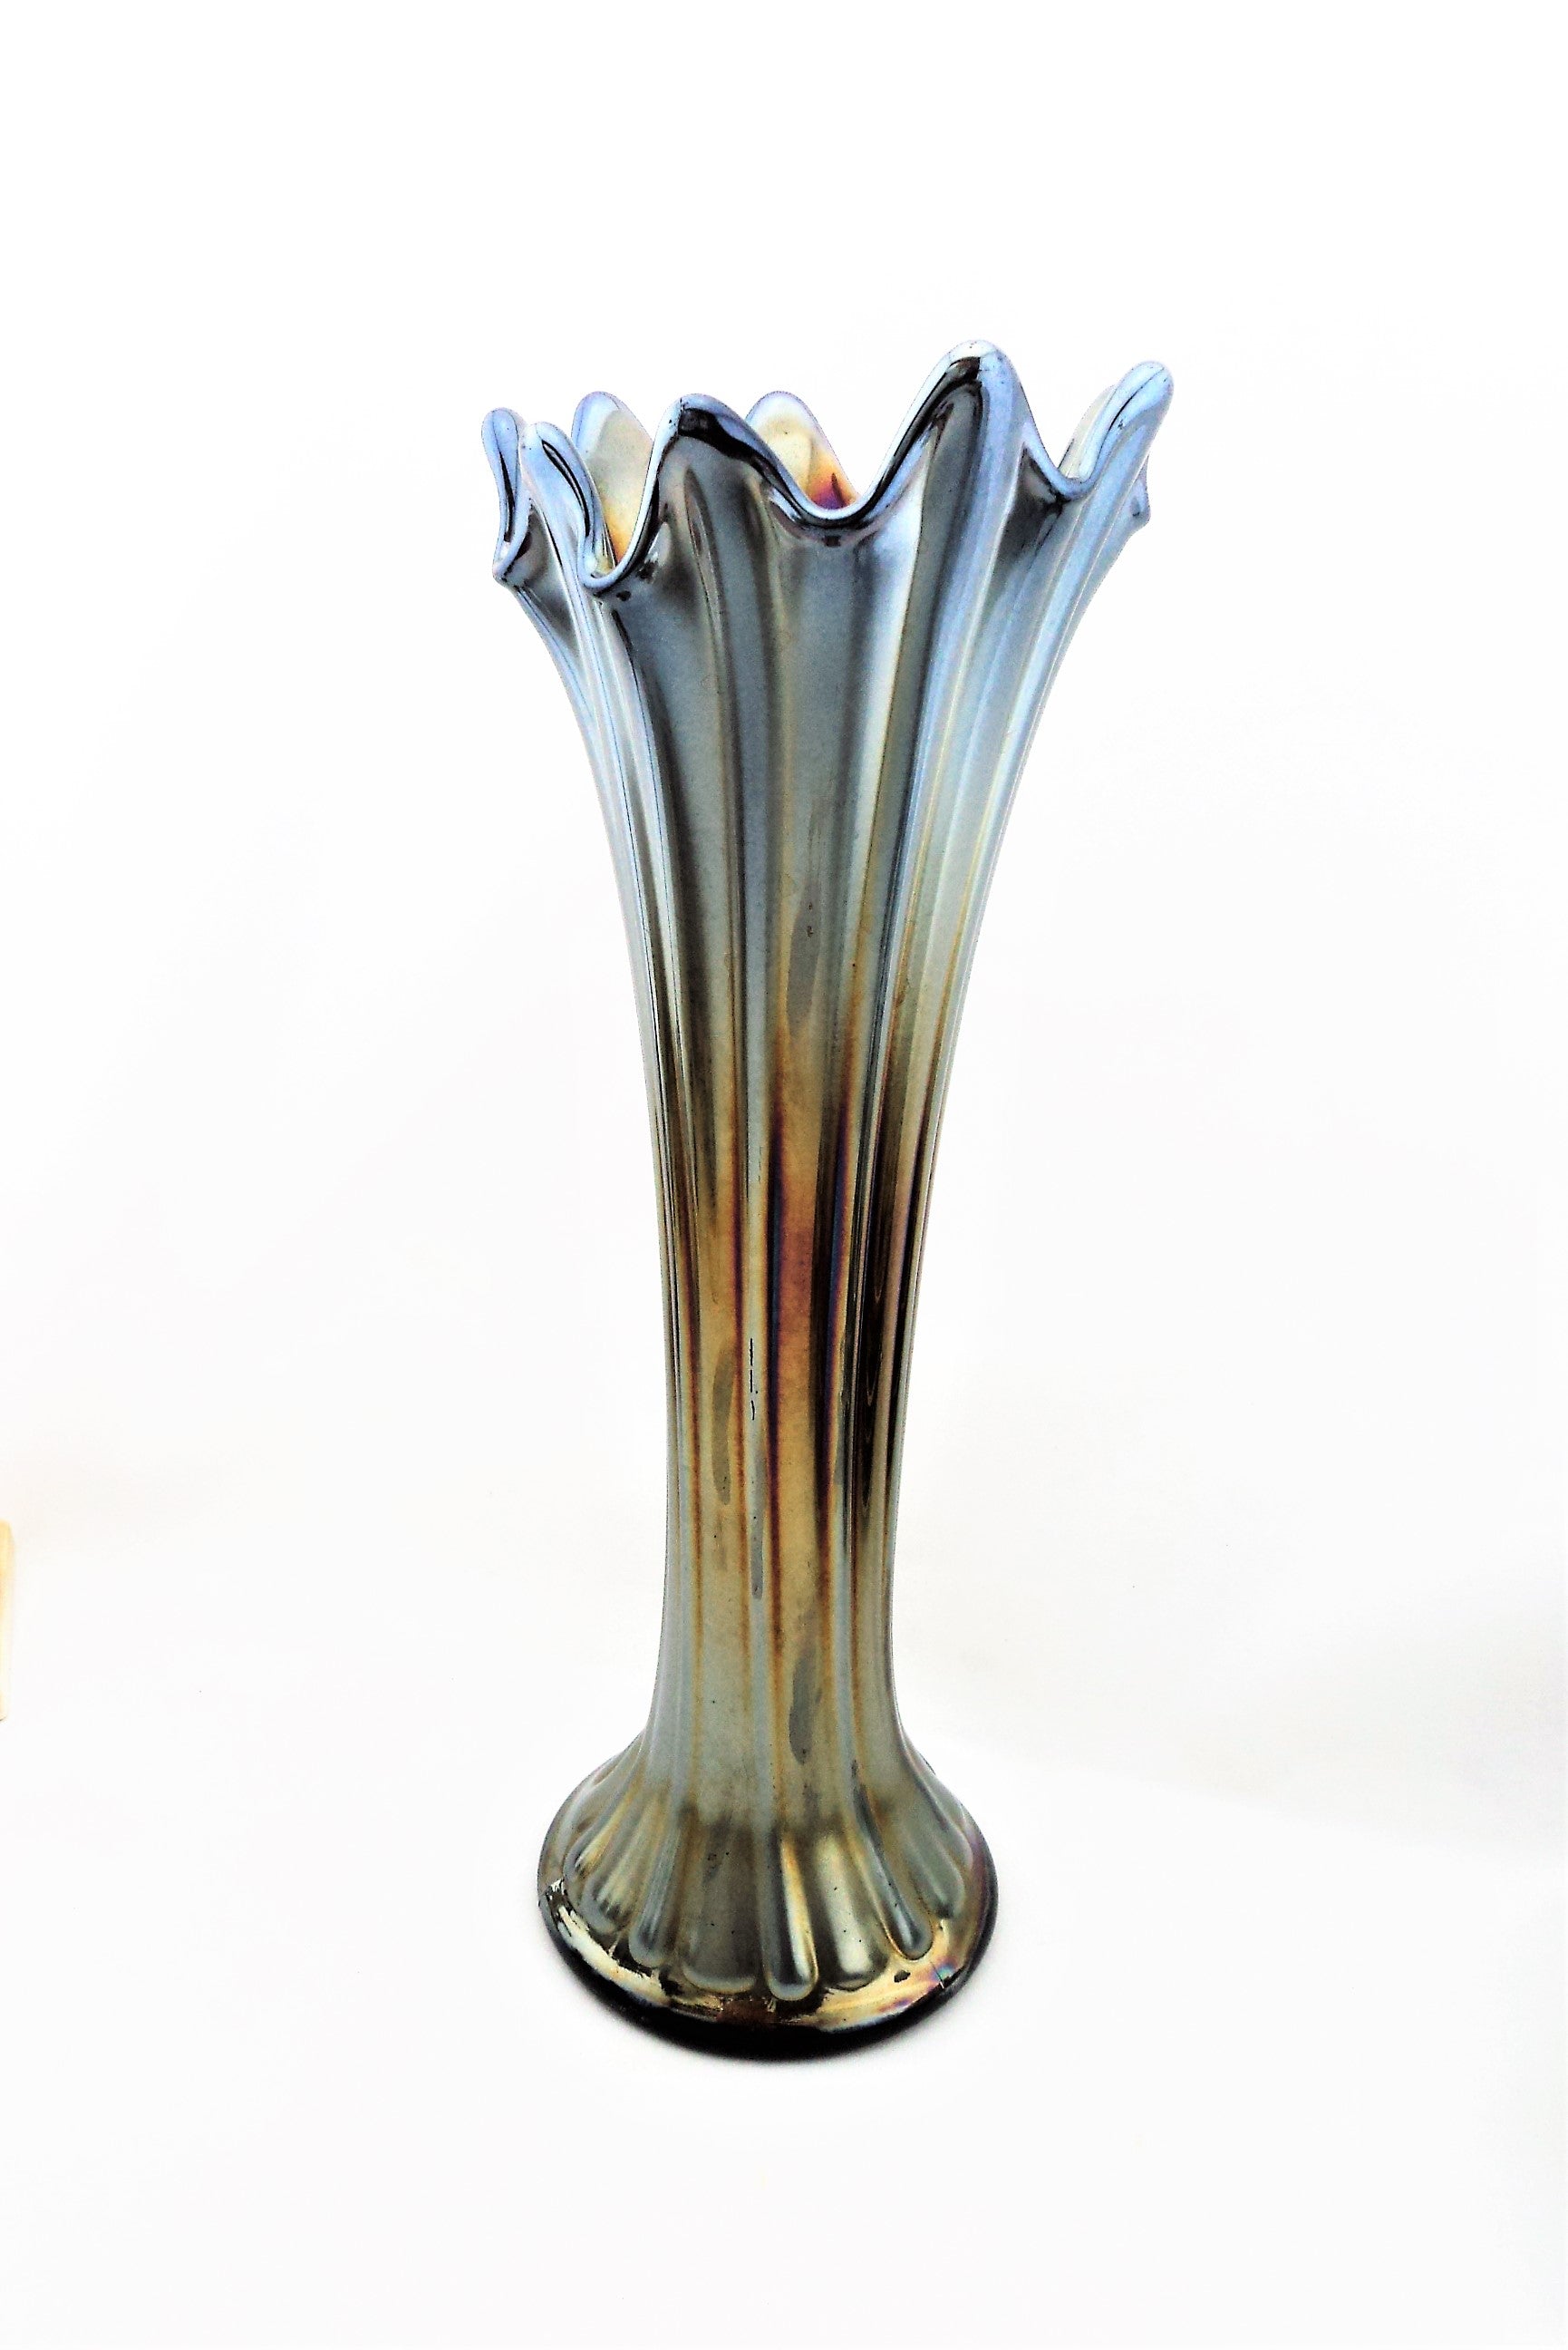 Northwood Standard Thin Ribs Carnival Glass Vase